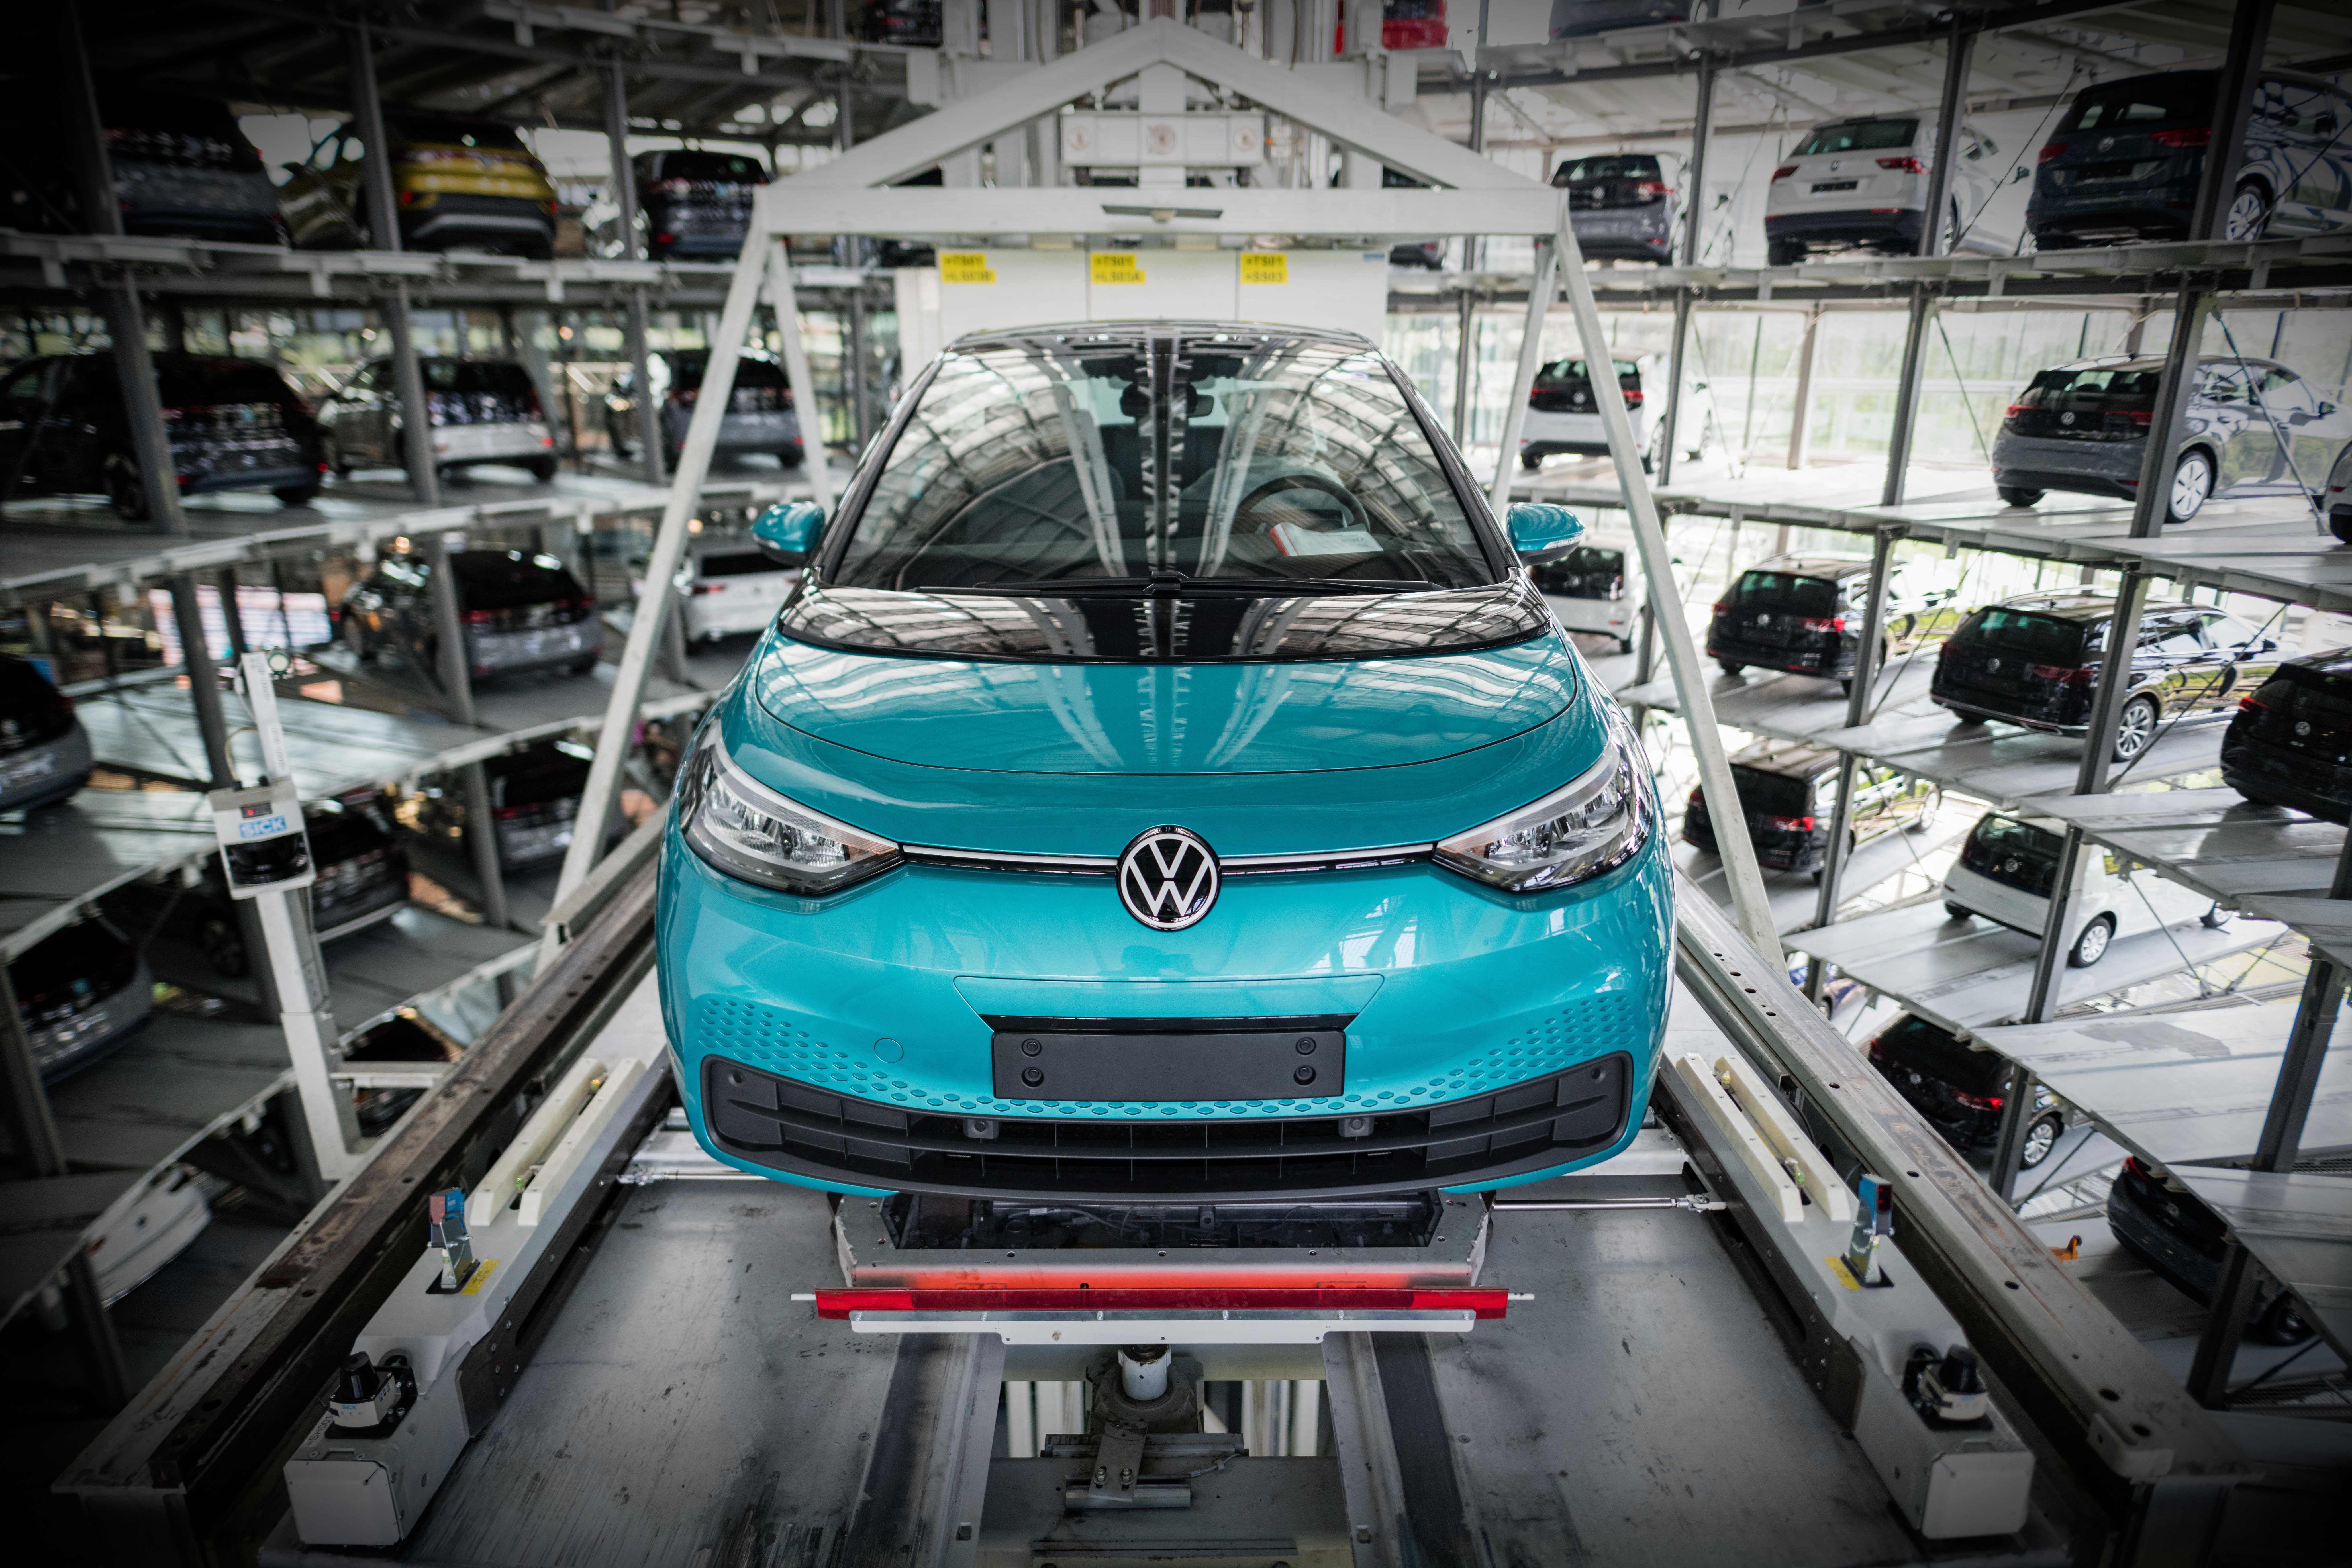 Volkswagen a security 3.3 million drivers' details | TechCrunch